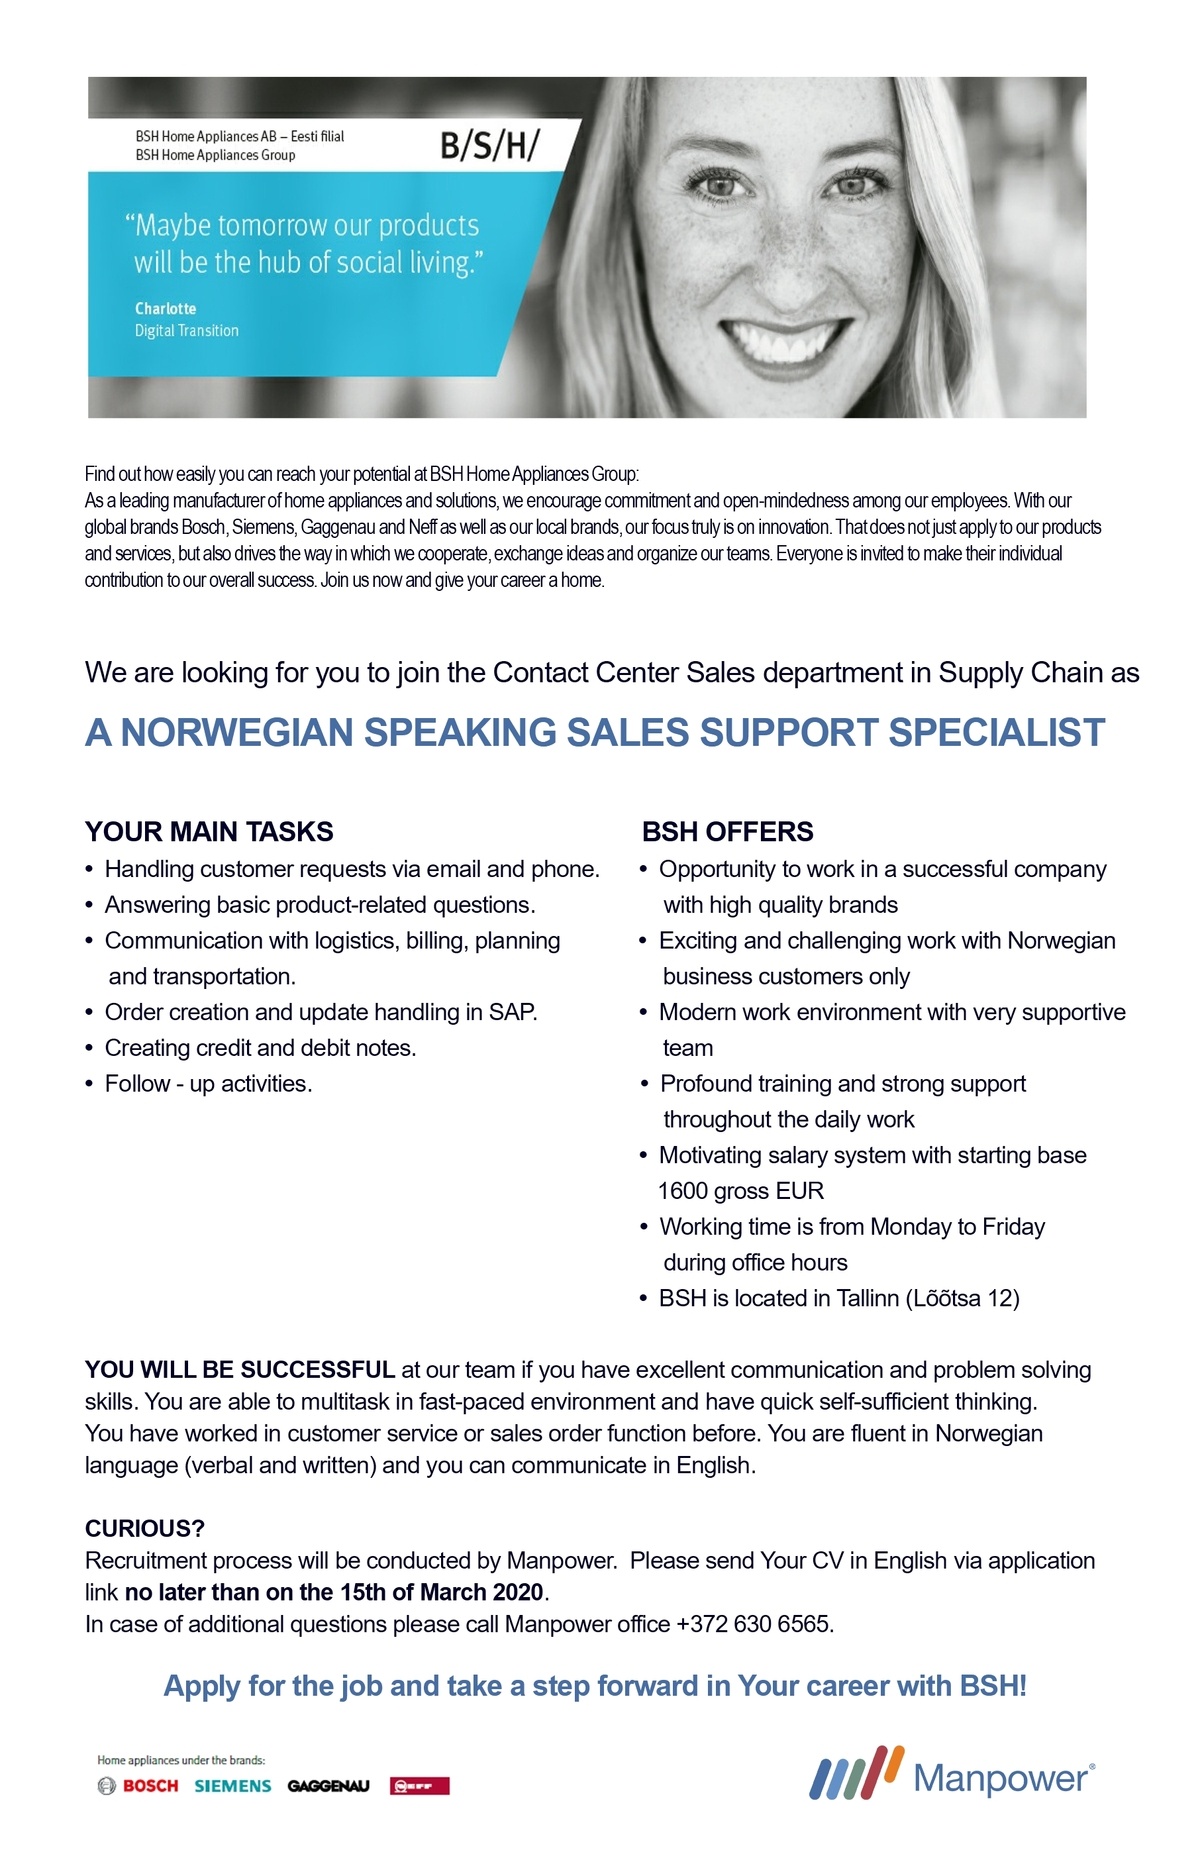 Manpower OÜ Norwegian Speaking Sales Support Specialist 